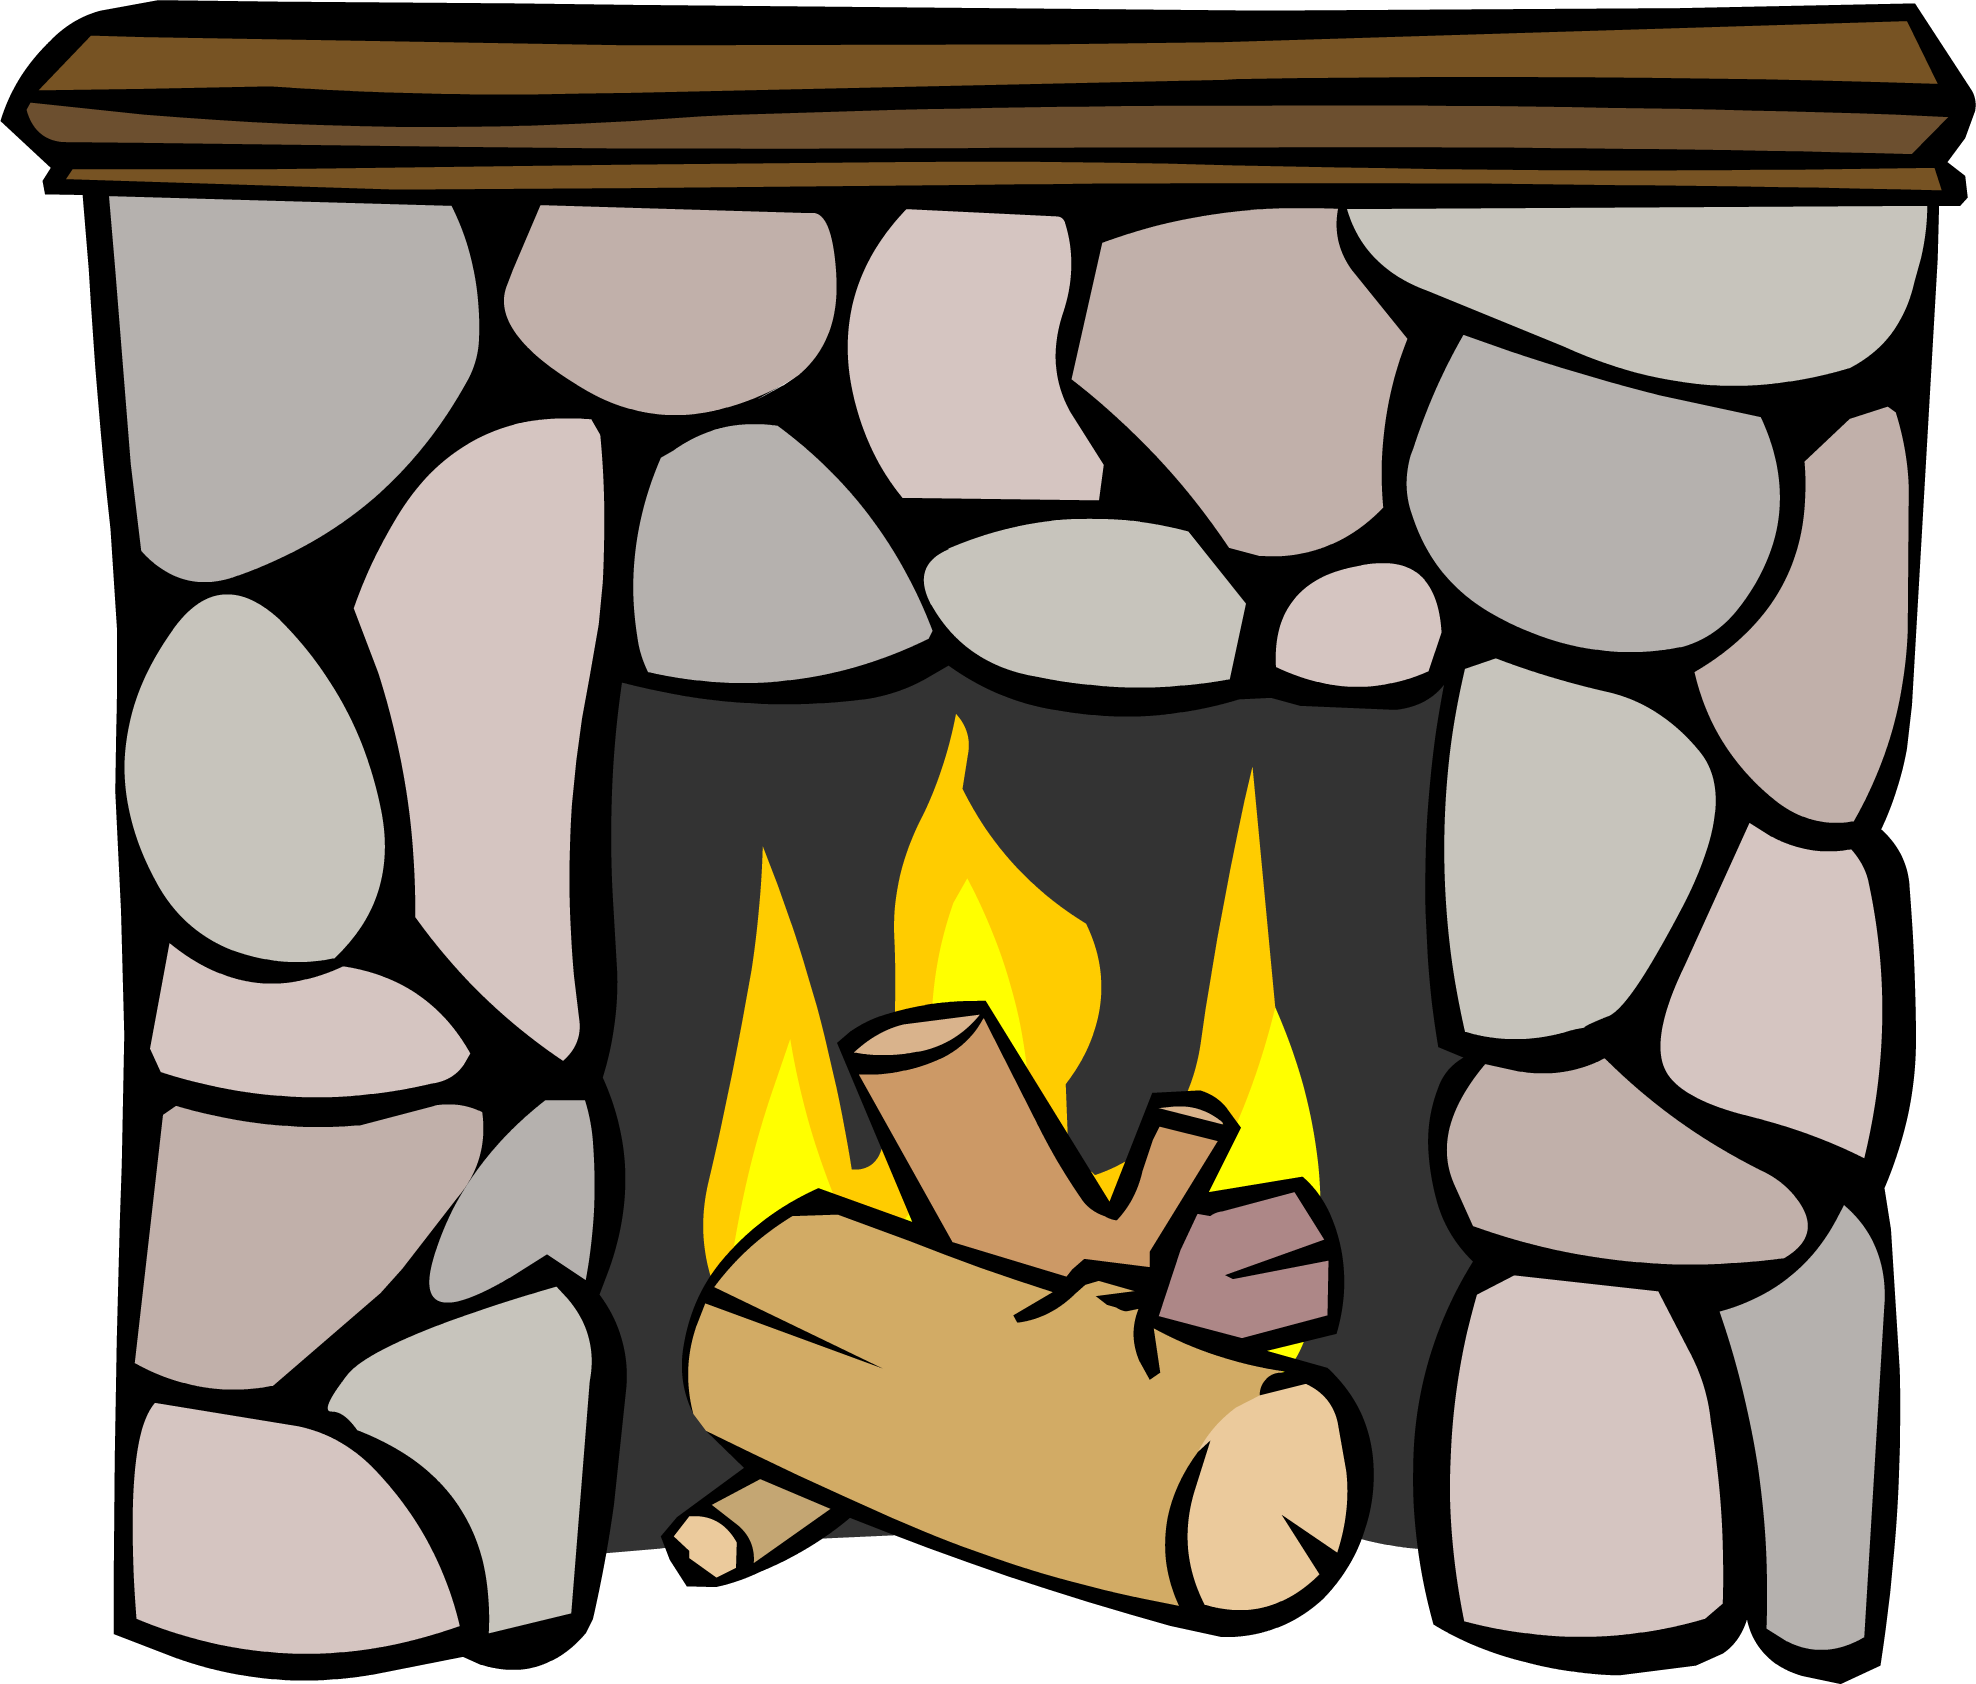 fireplace clipart chimenea